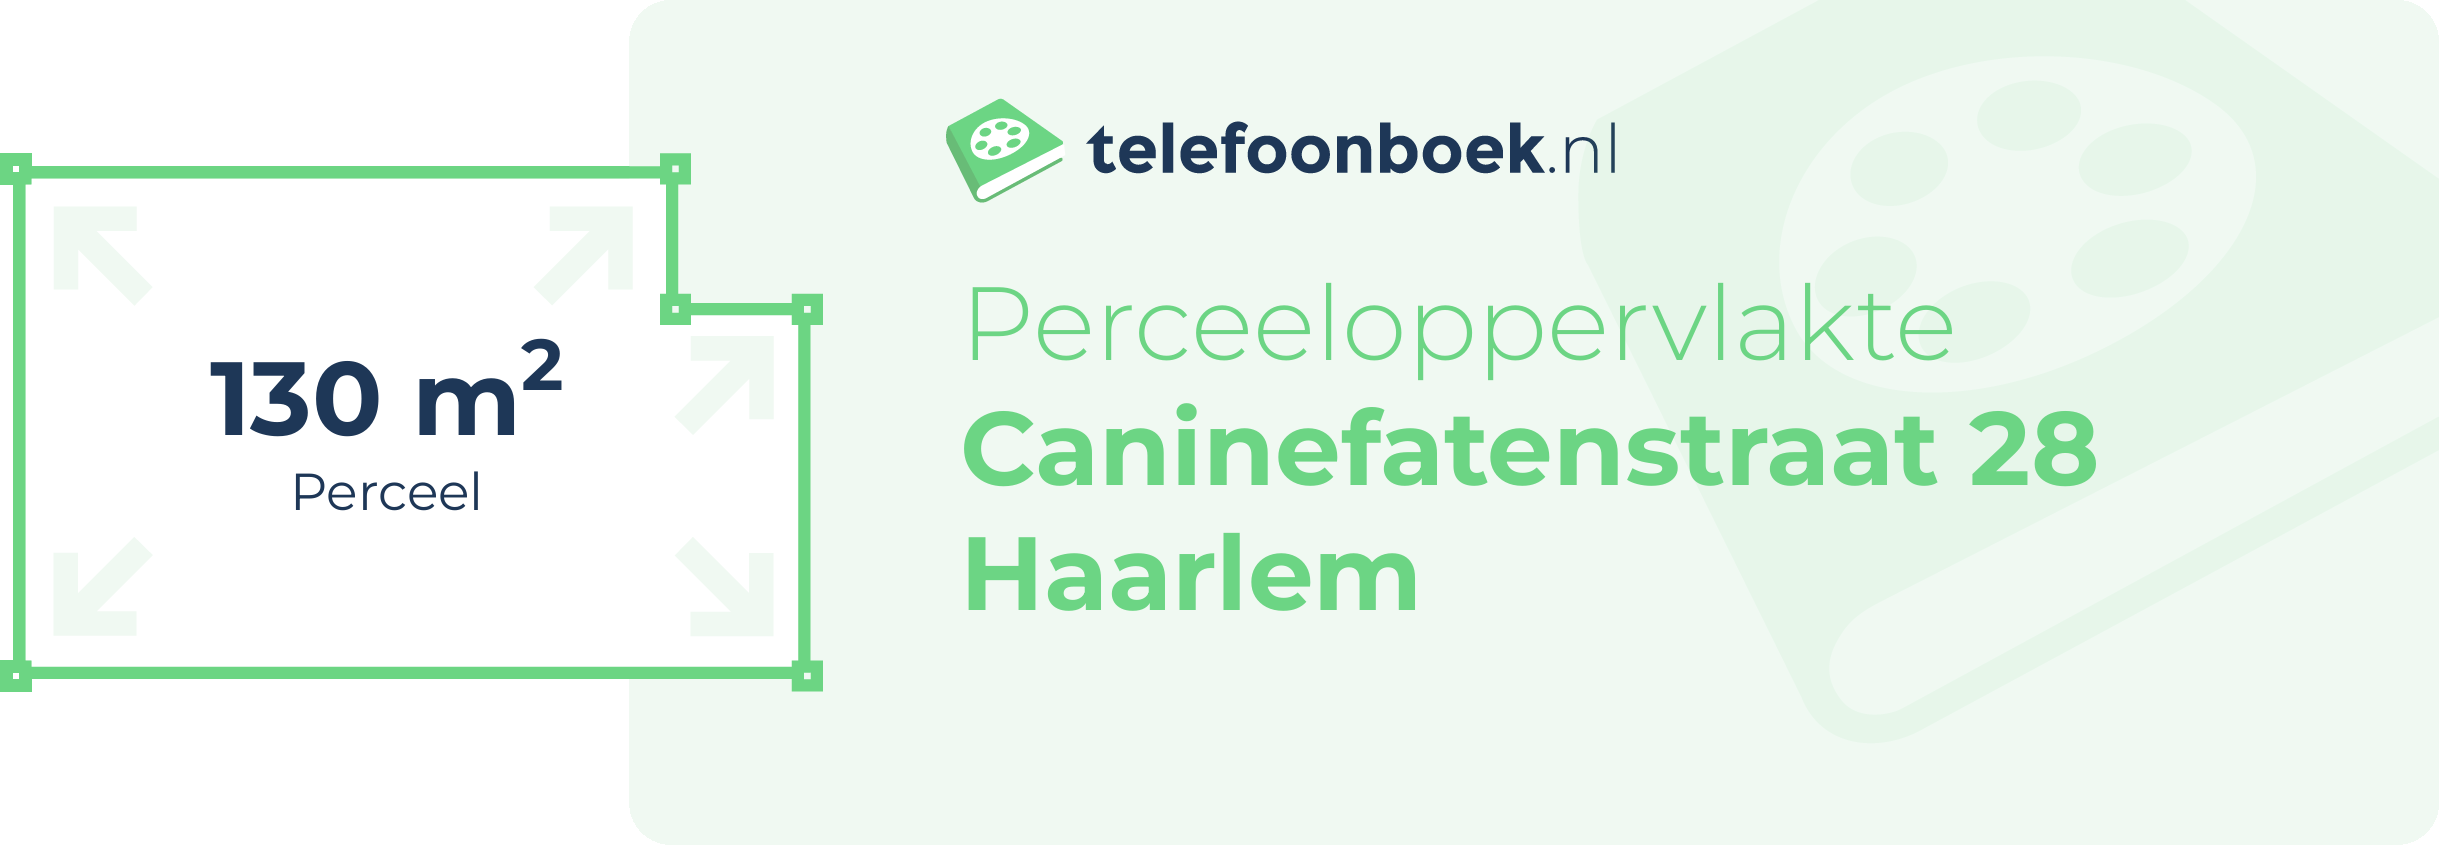 Perceeloppervlakte Caninefatenstraat 28 Haarlem